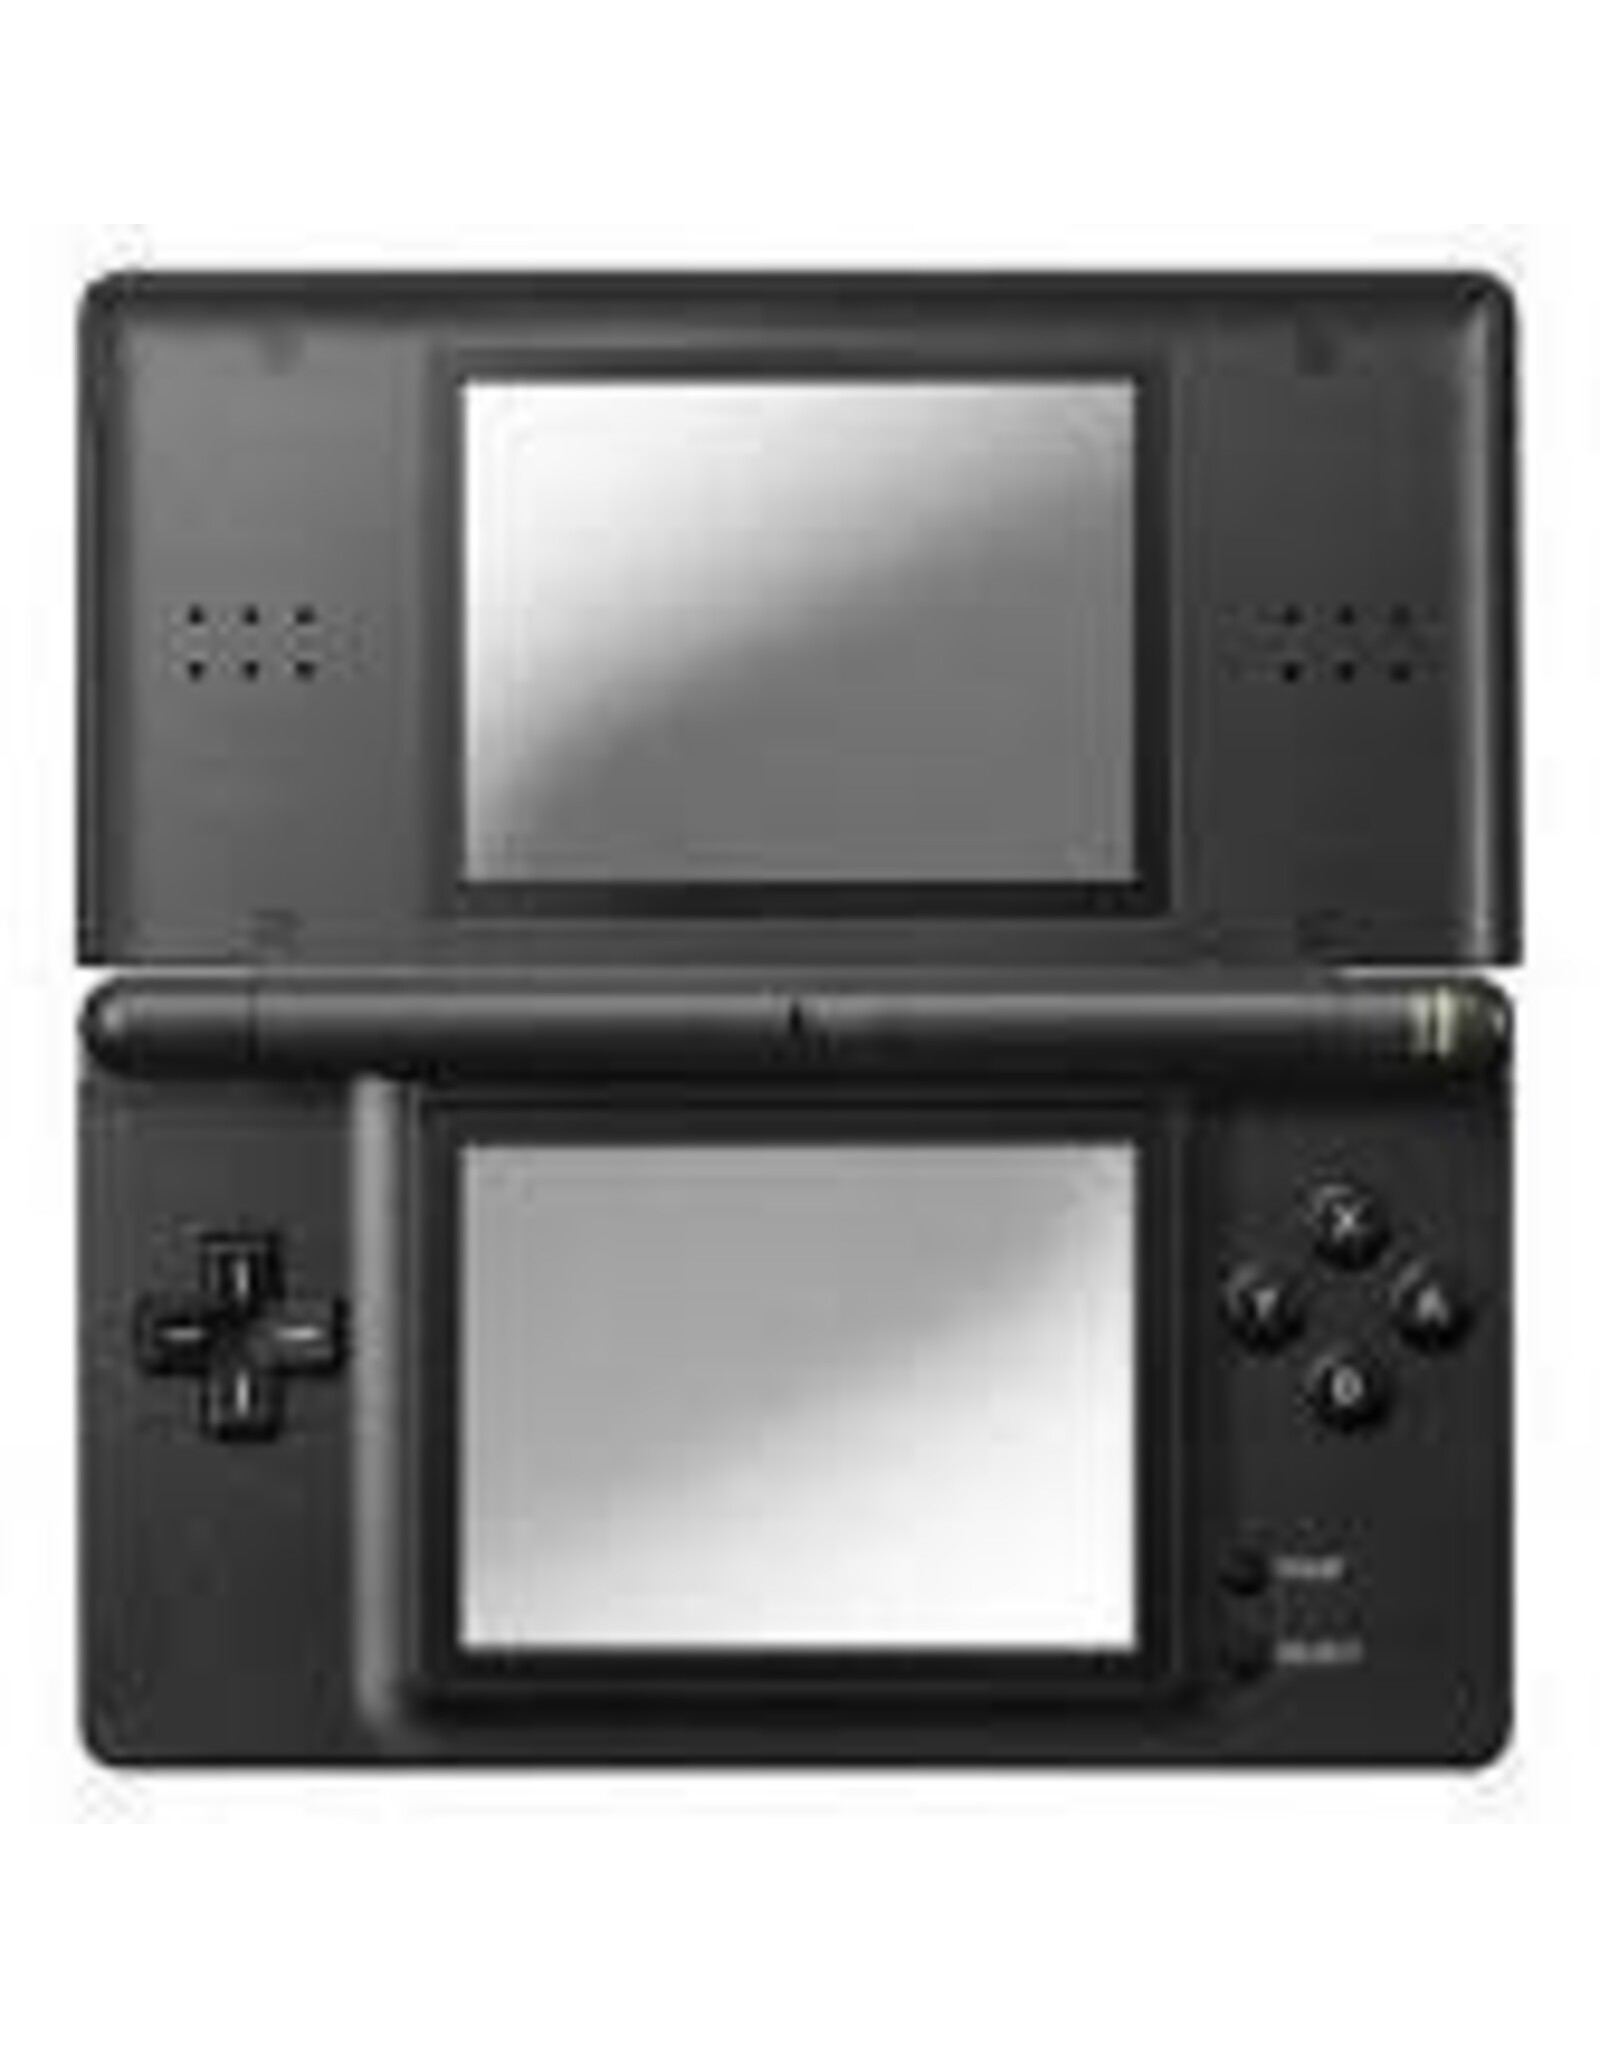 Nintendo DS Nintendo DS Lite - Black (Used, Cosmetic Damage)